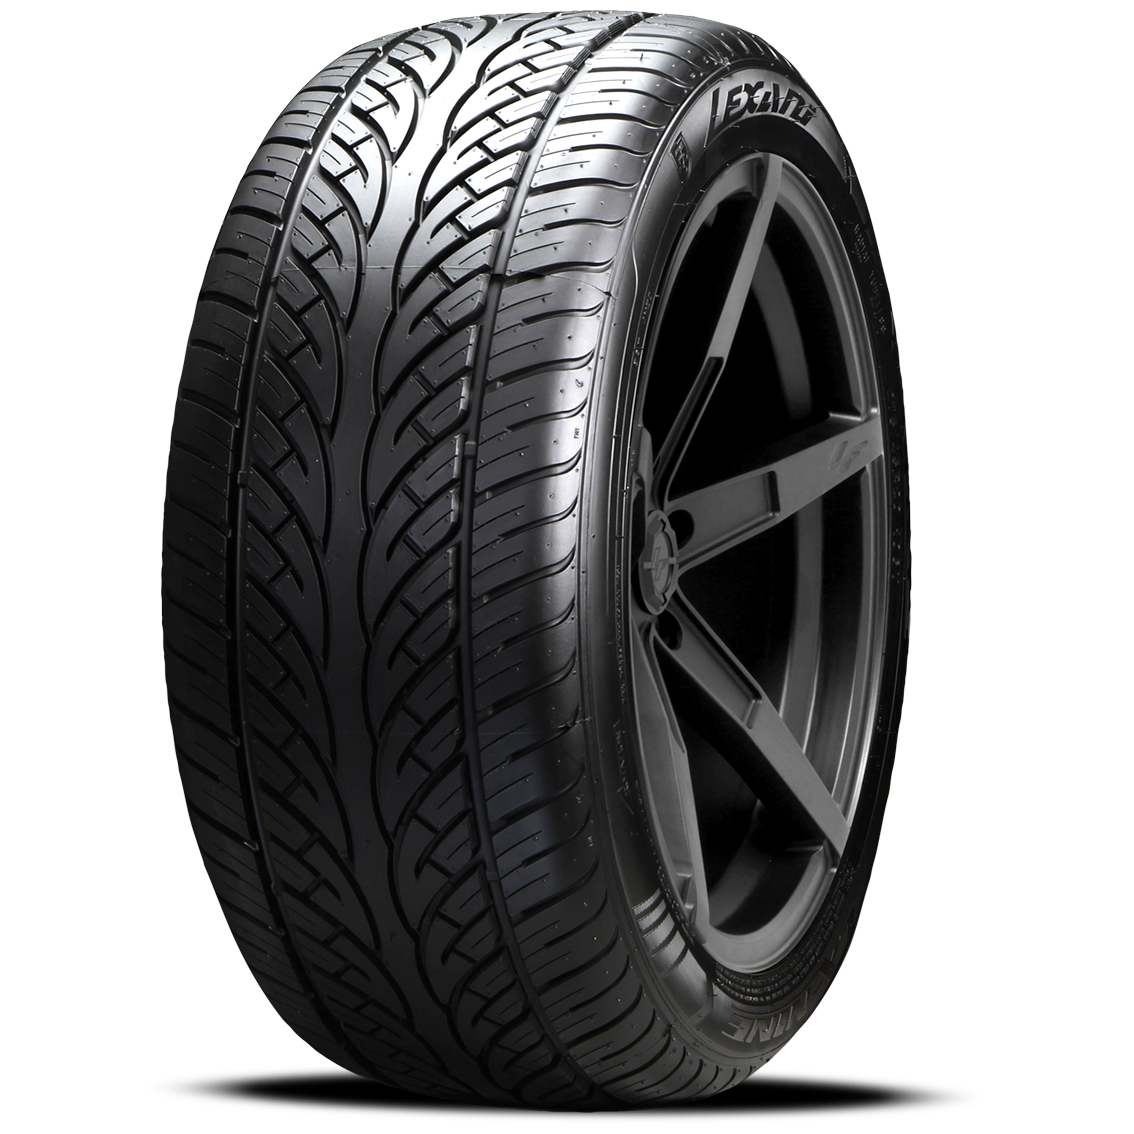 LEXANI LX-NINE 265/35R22 (29.3X10.7R 22) Tires